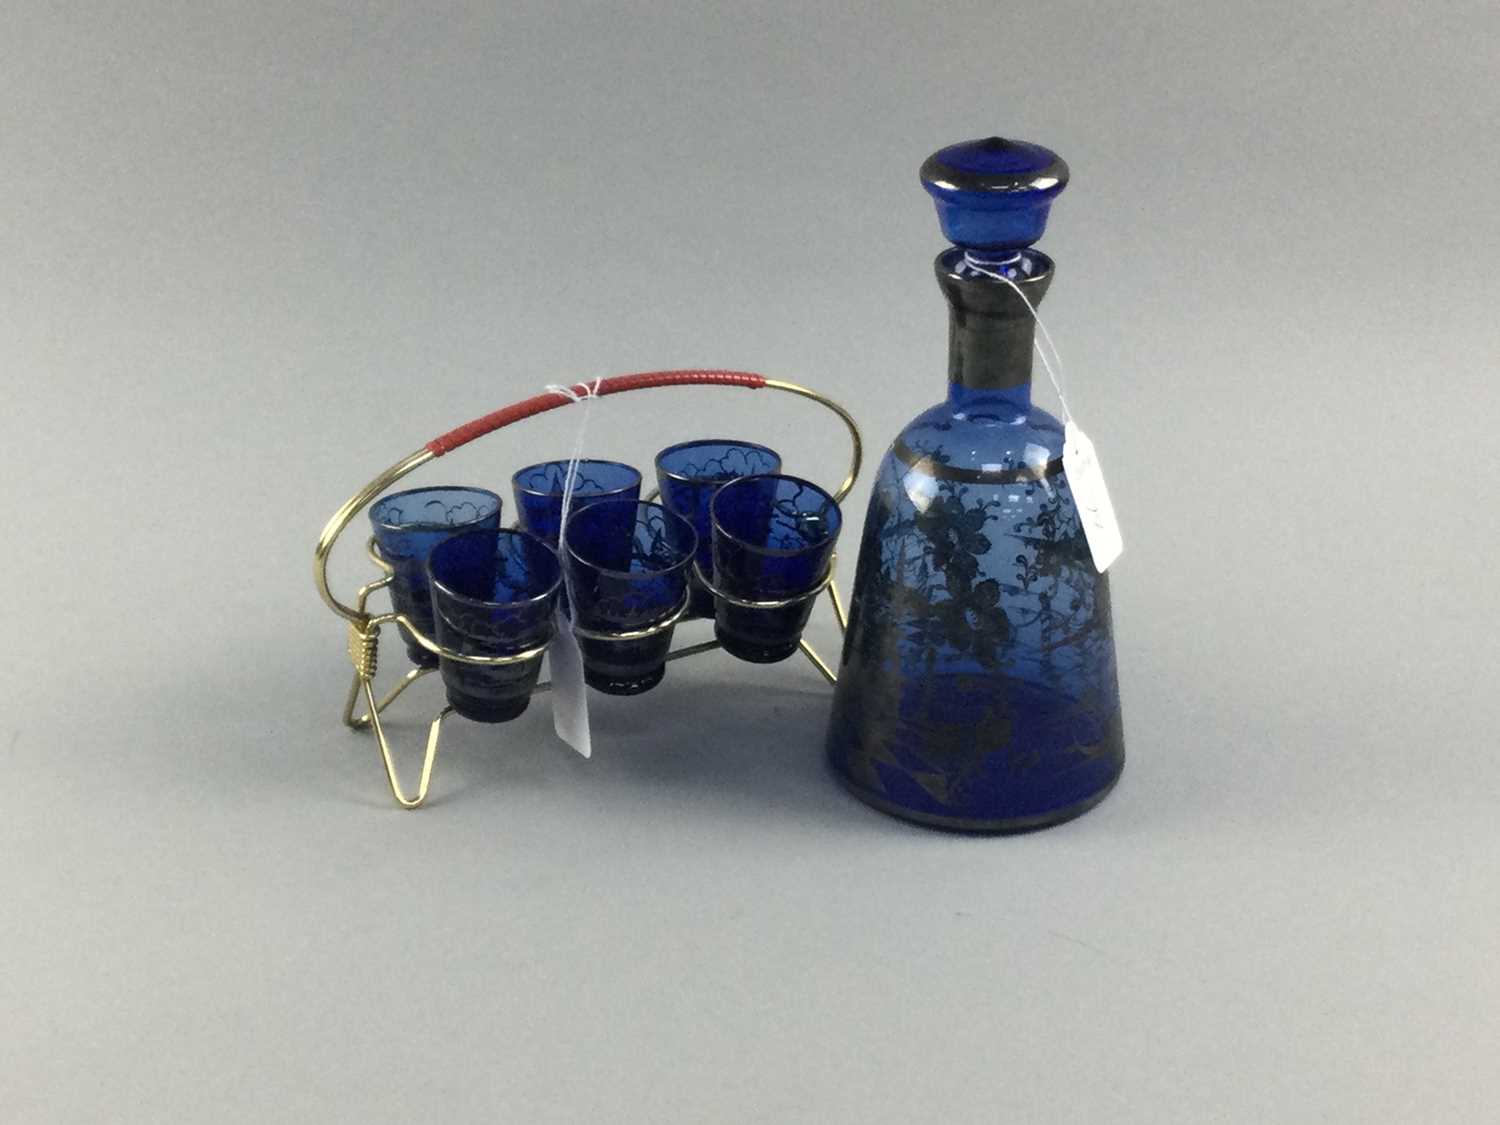 Lot 77 - A BLUE GLASS DECANTER AND SIX SHOT GLASSES